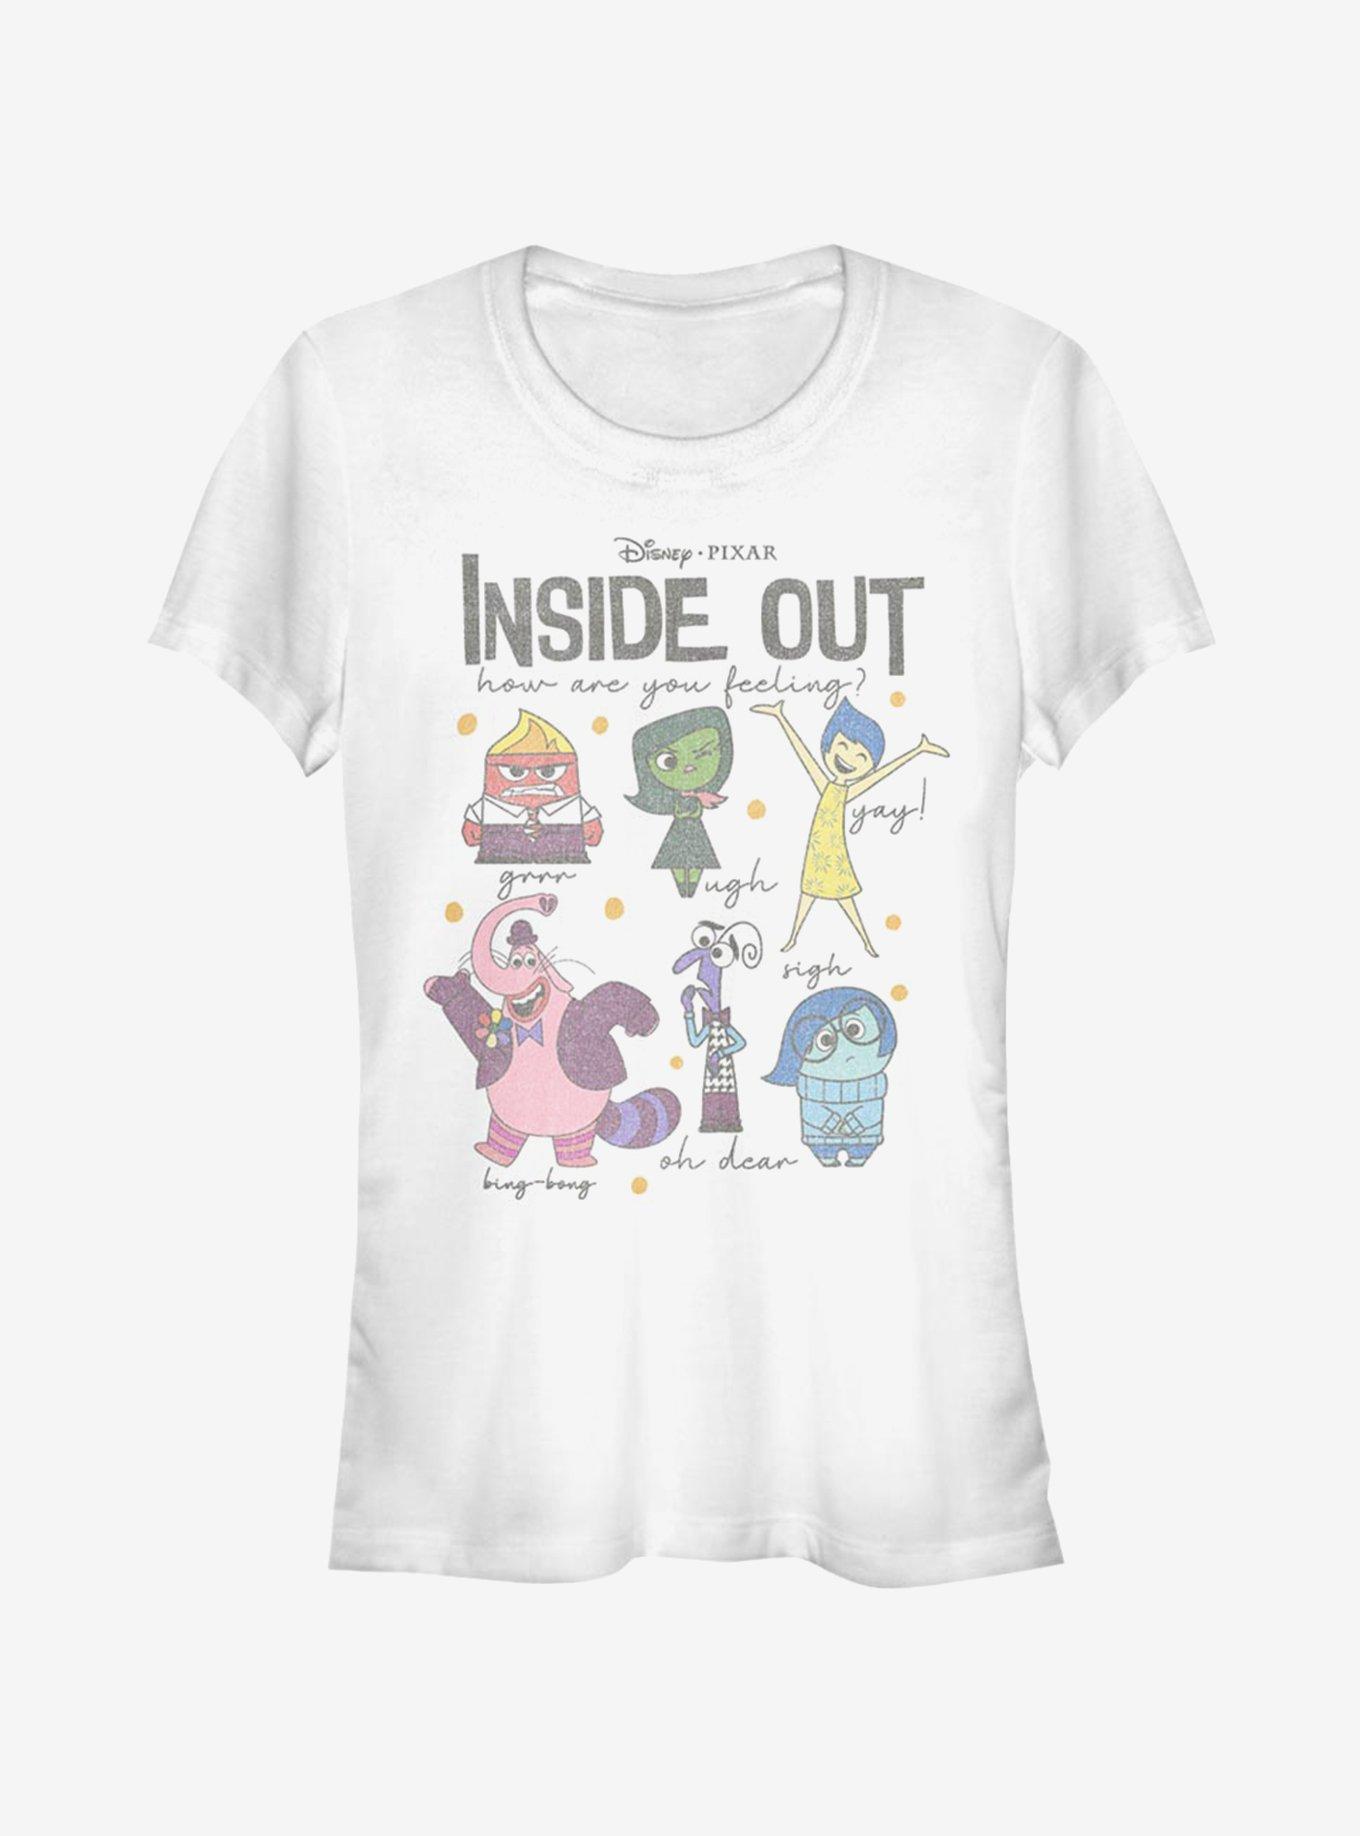 INSIDE OUT Apparel for Kids - T-shirts, Backpacks, Socks & More